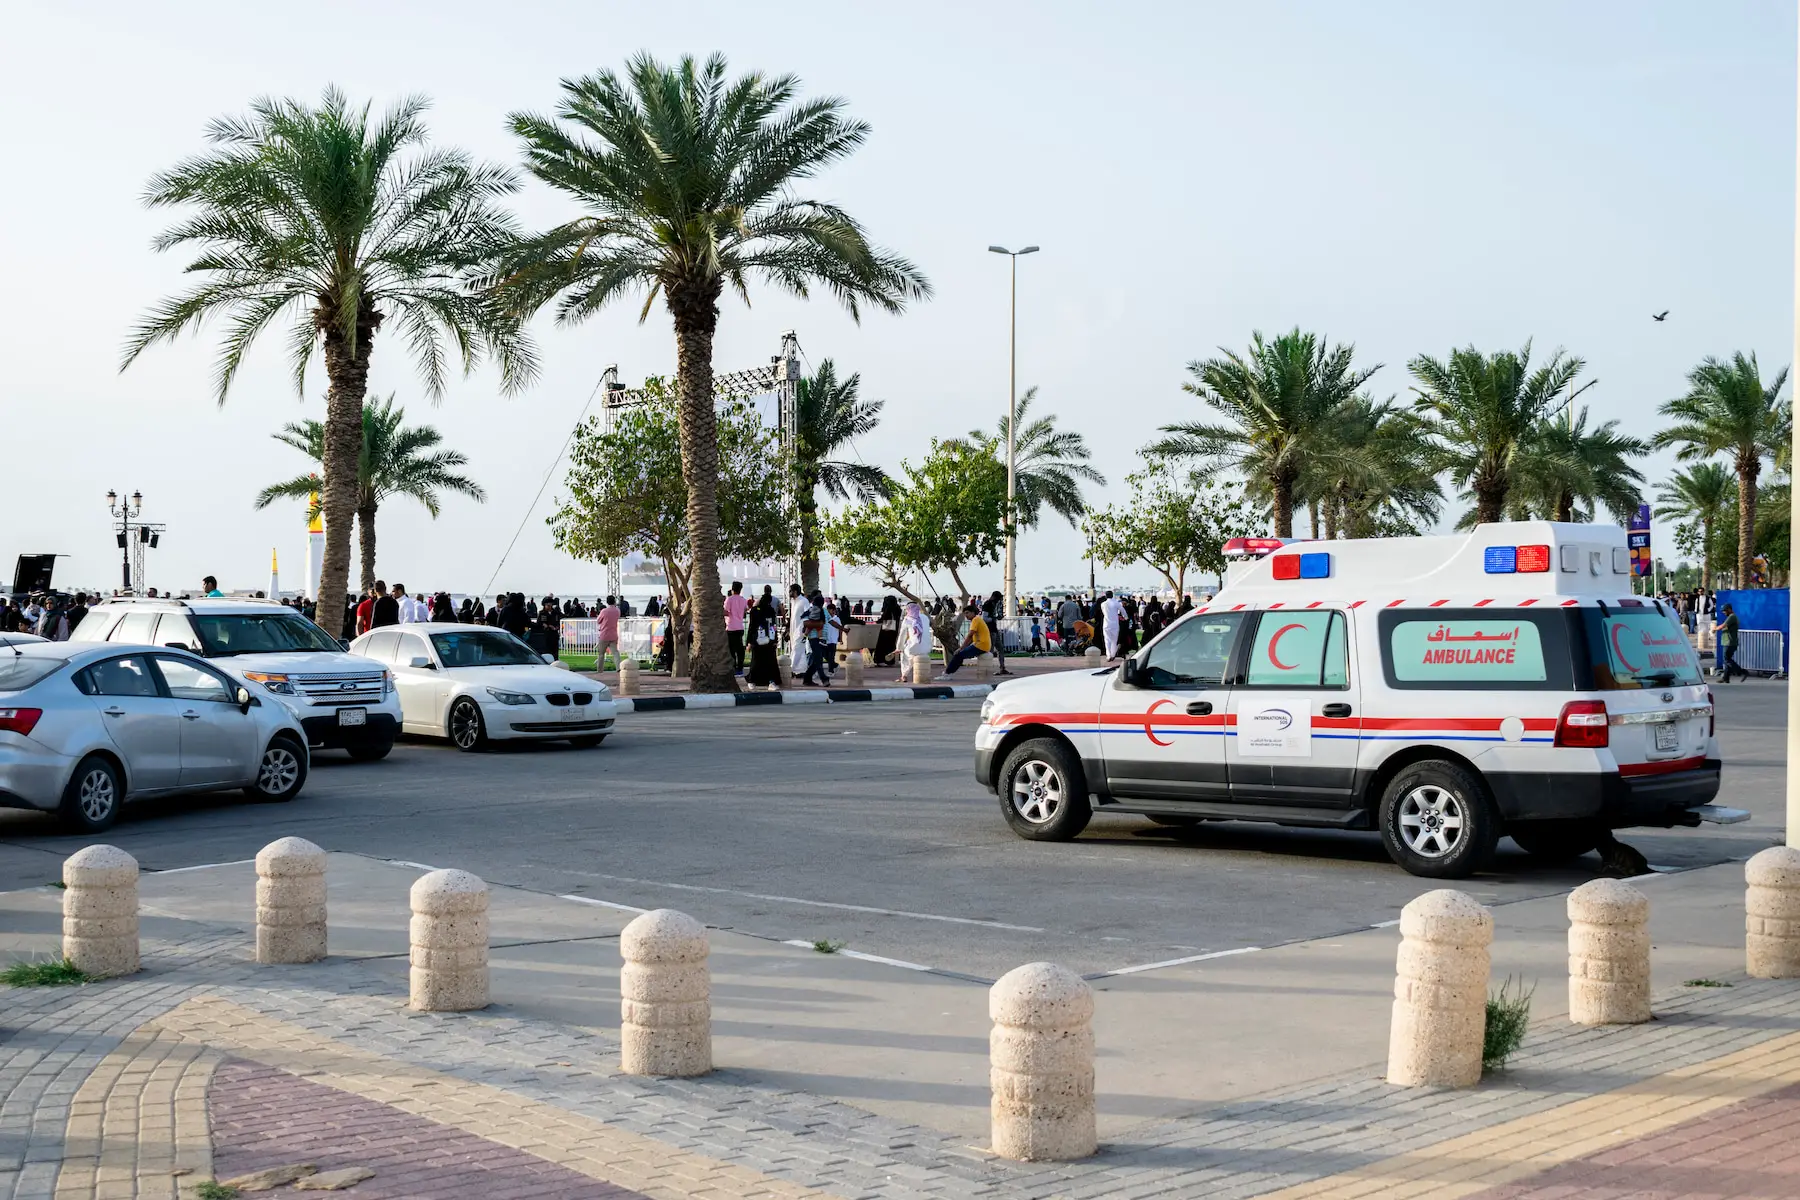 Ambulance vehicle in a car park in Saudi Arabia.